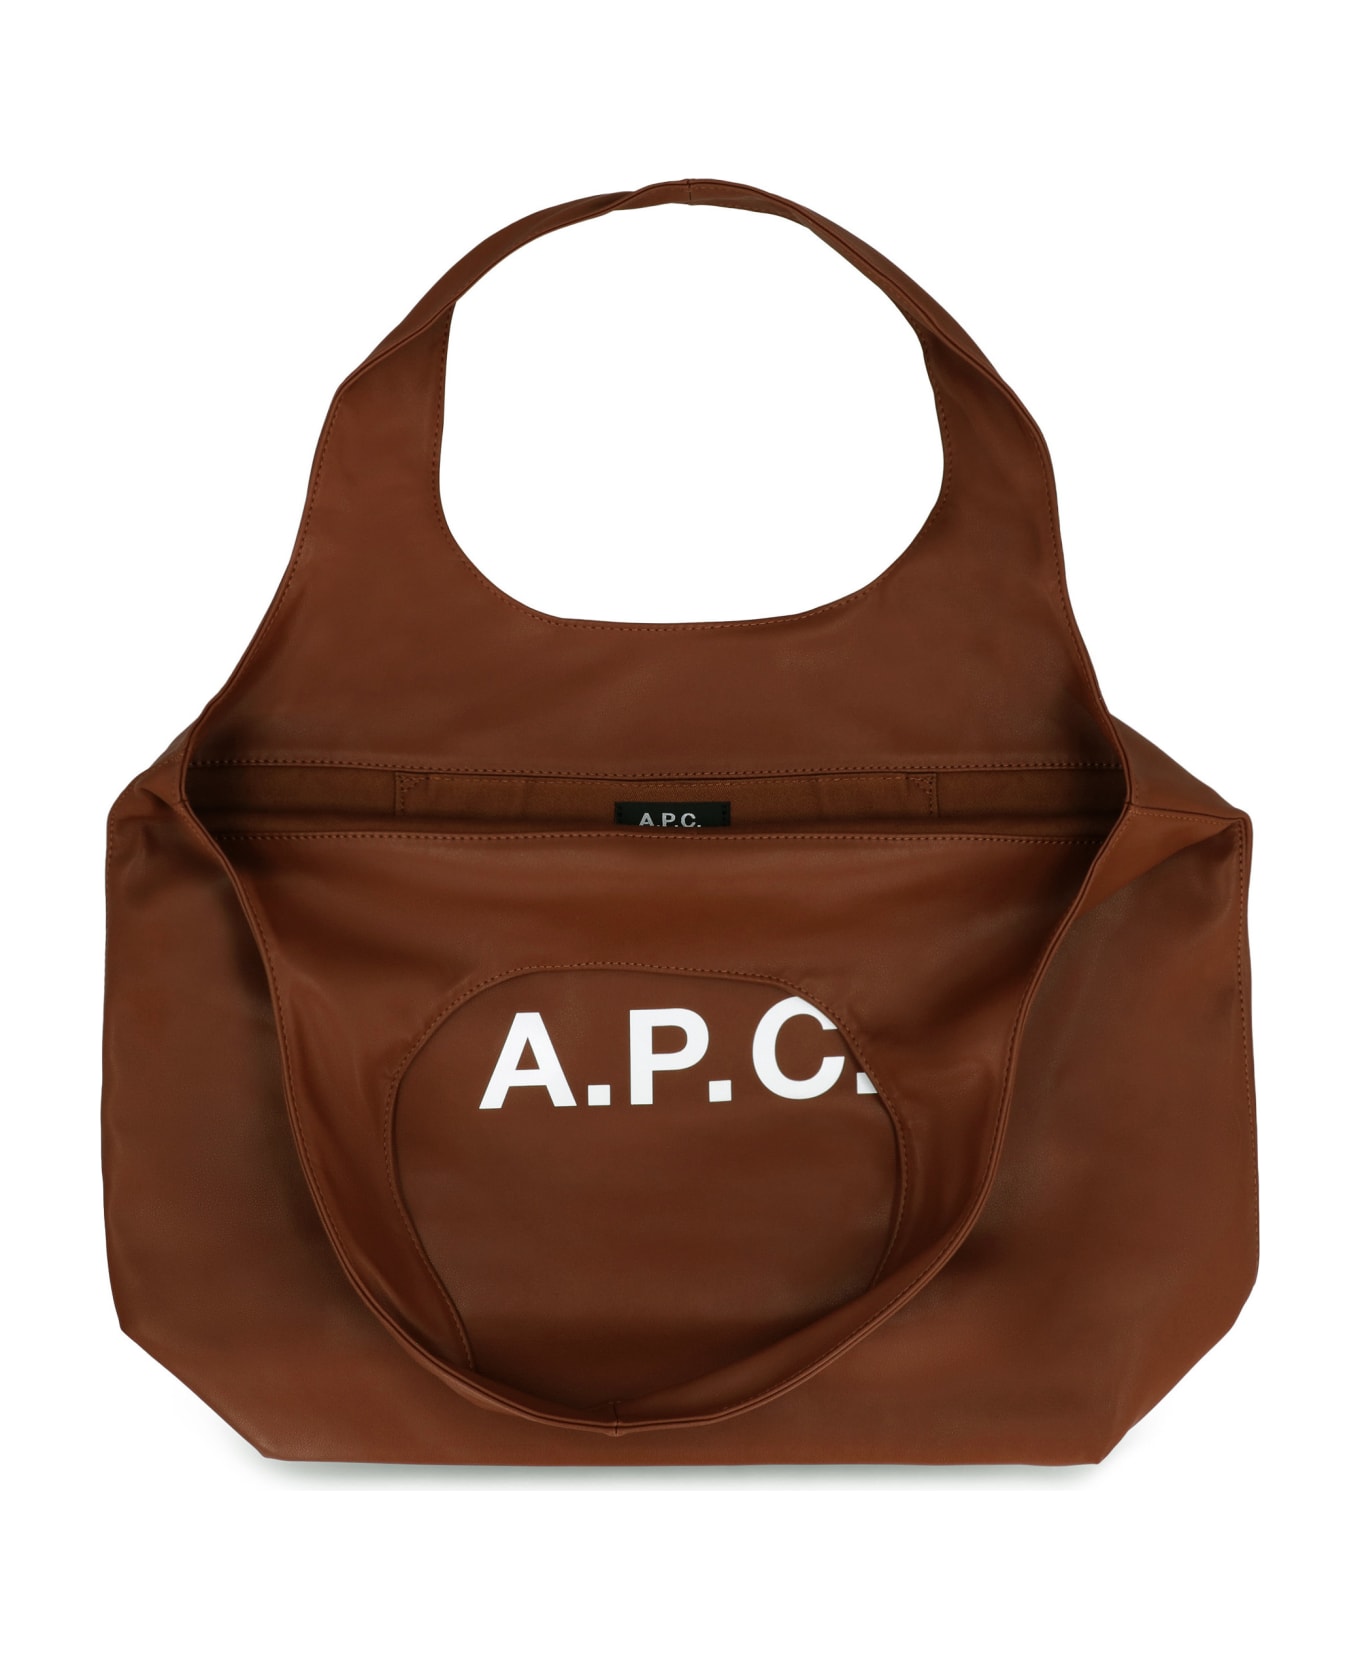 A.P.C. Vegan Leather Tote - brown